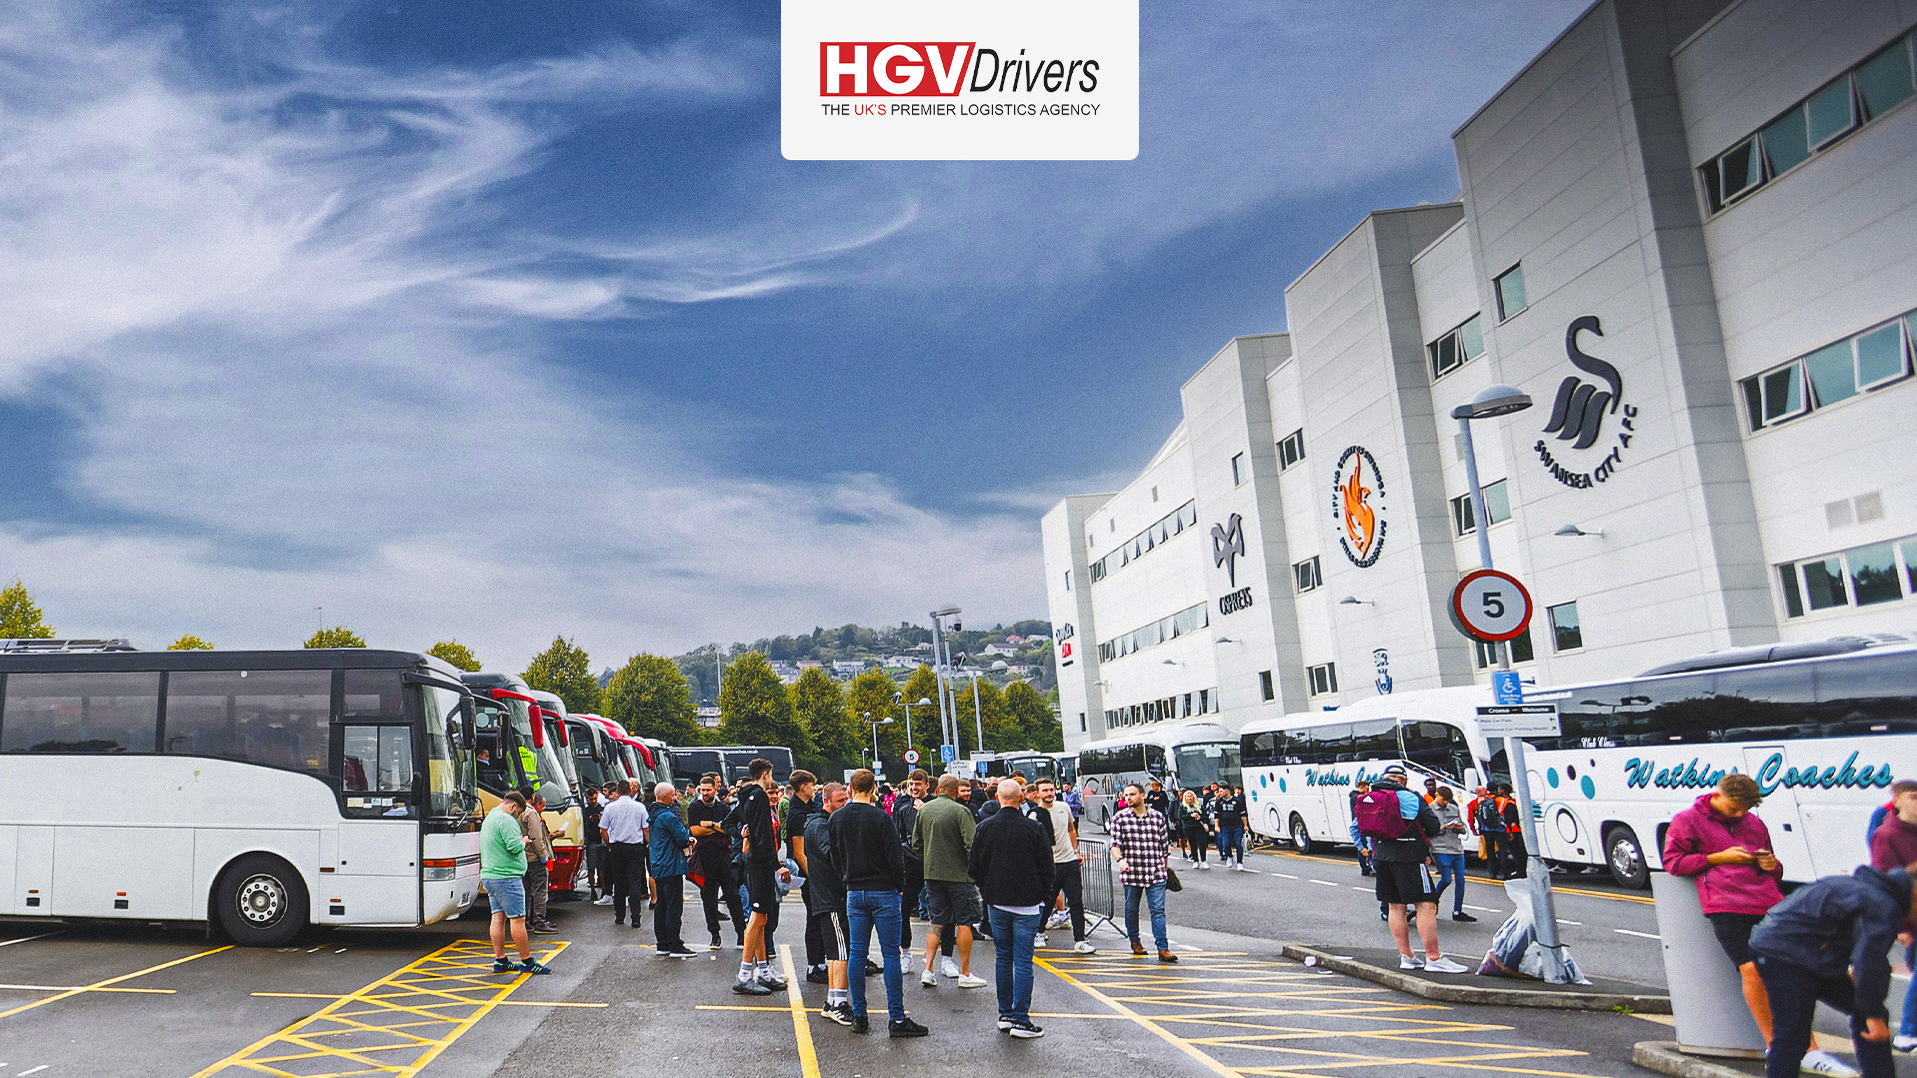 HGV Drivers UK discounted travel